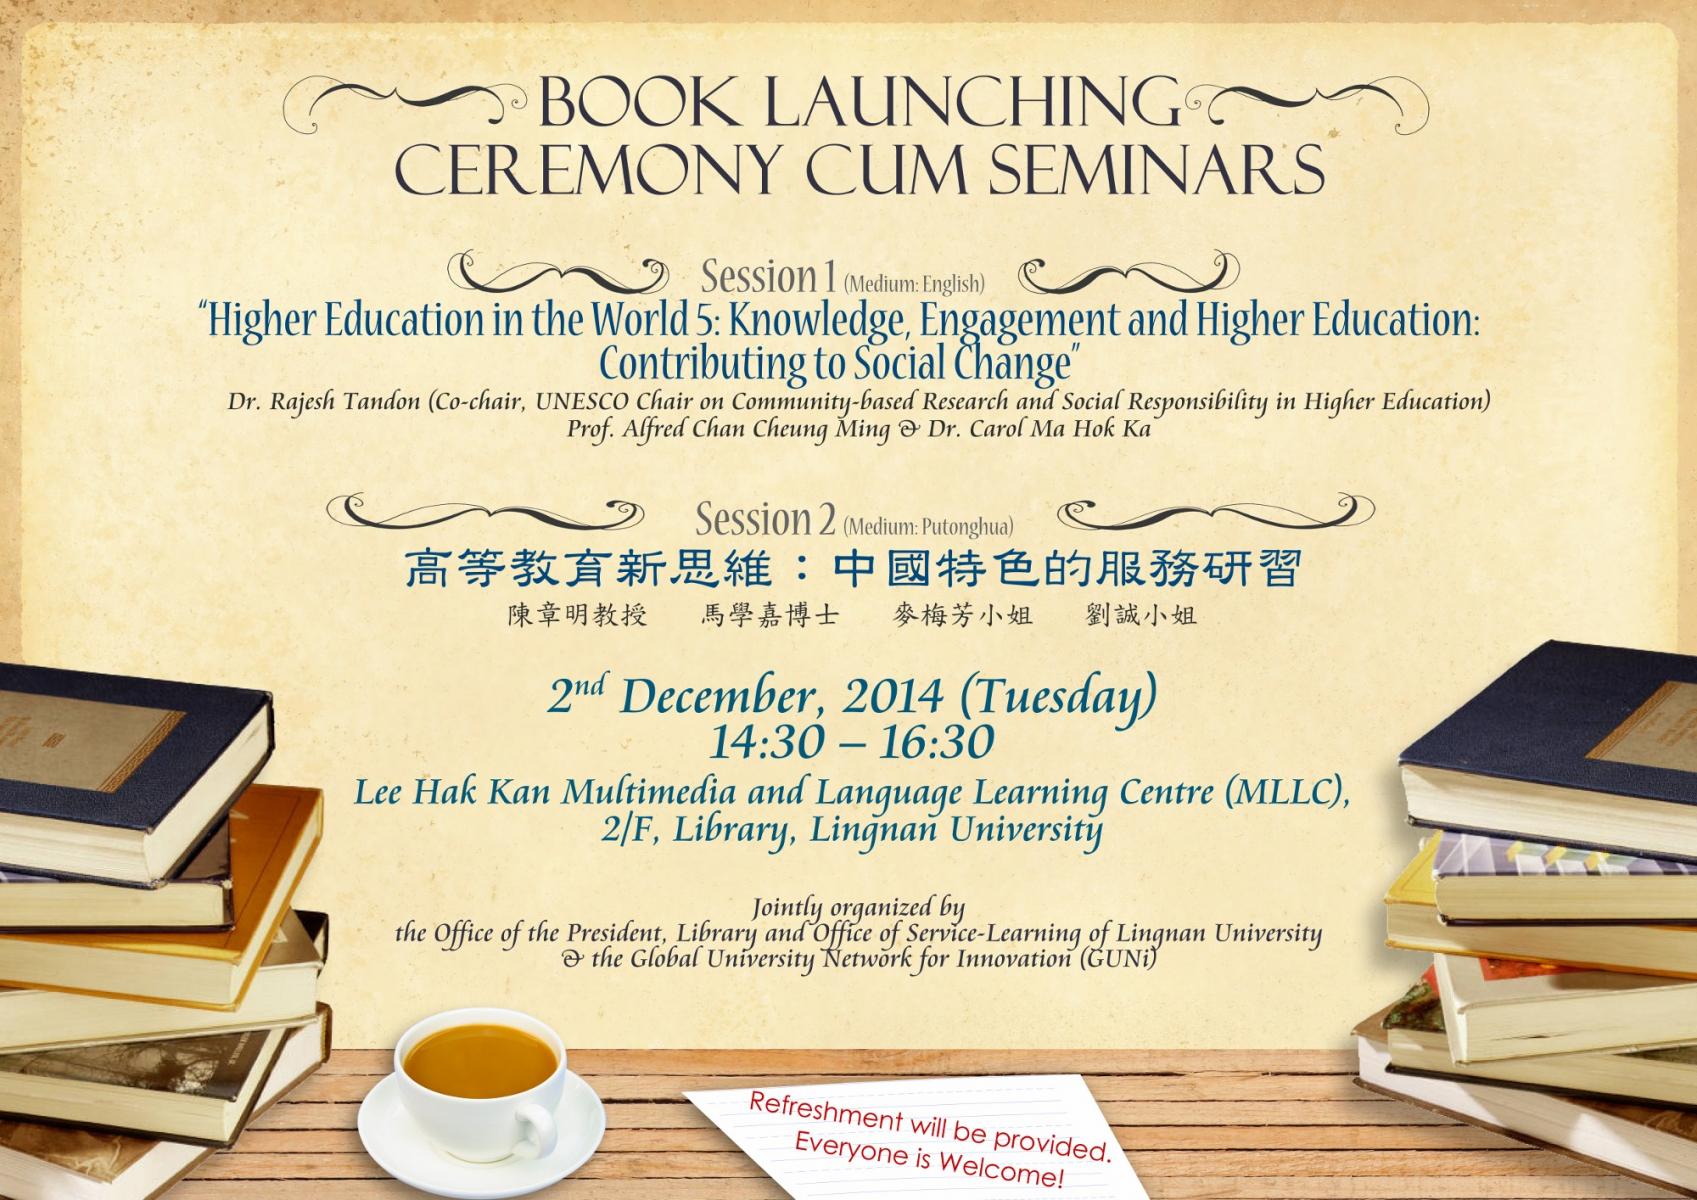 Book Launching Ceremony Cum Seminars